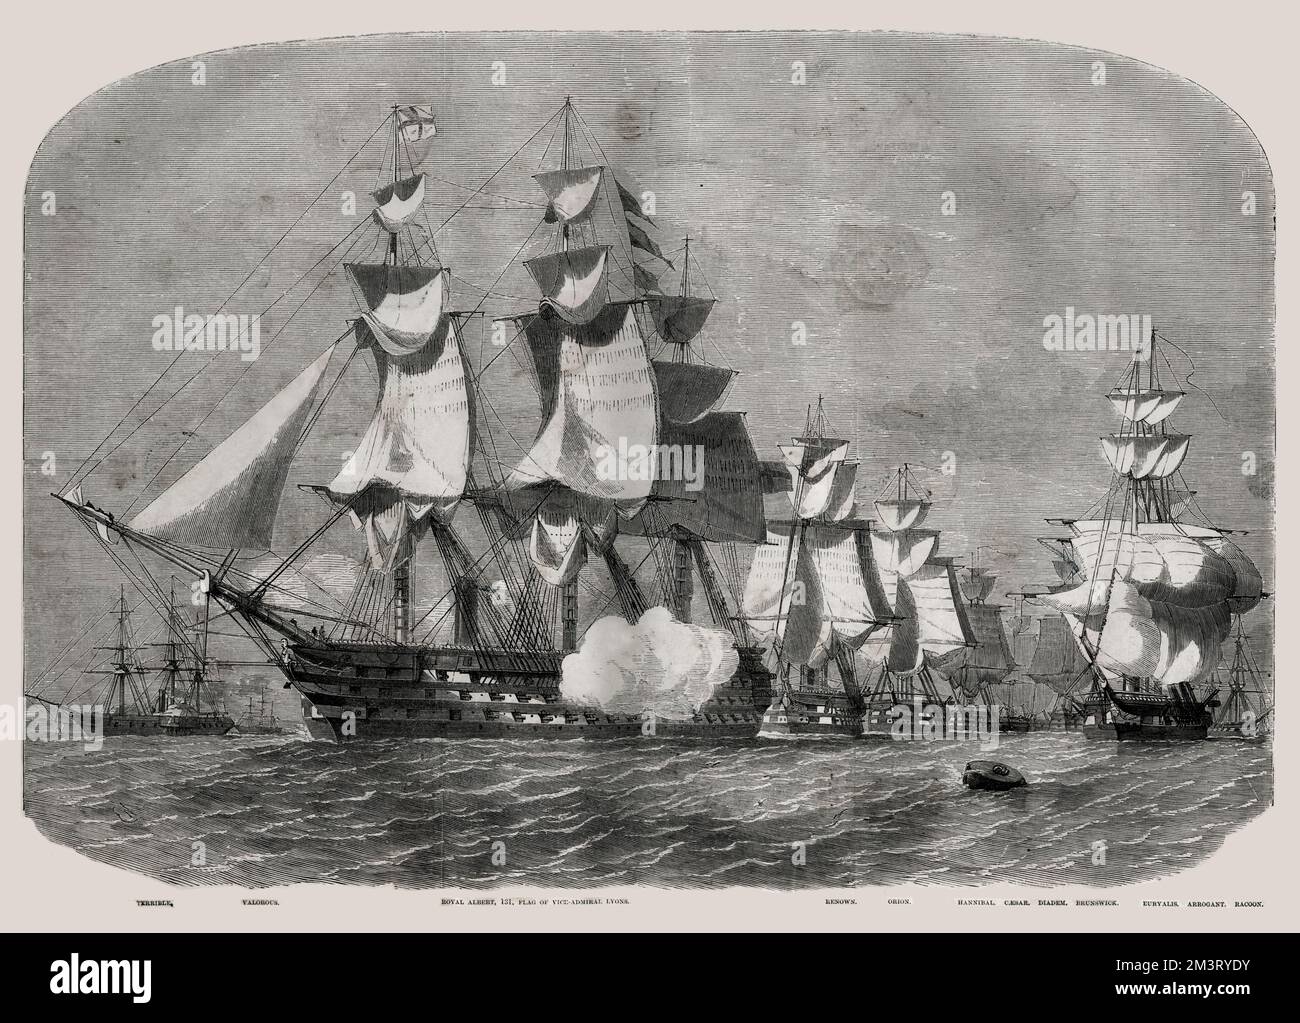 Ships - Terrible, Valorous, Royal Albert, Renown, Orion, Hannibal, Caesar, Diadem, Brunswick, Euryalis, Arrogant, Racoon.     Date: 1858 Stock Photo